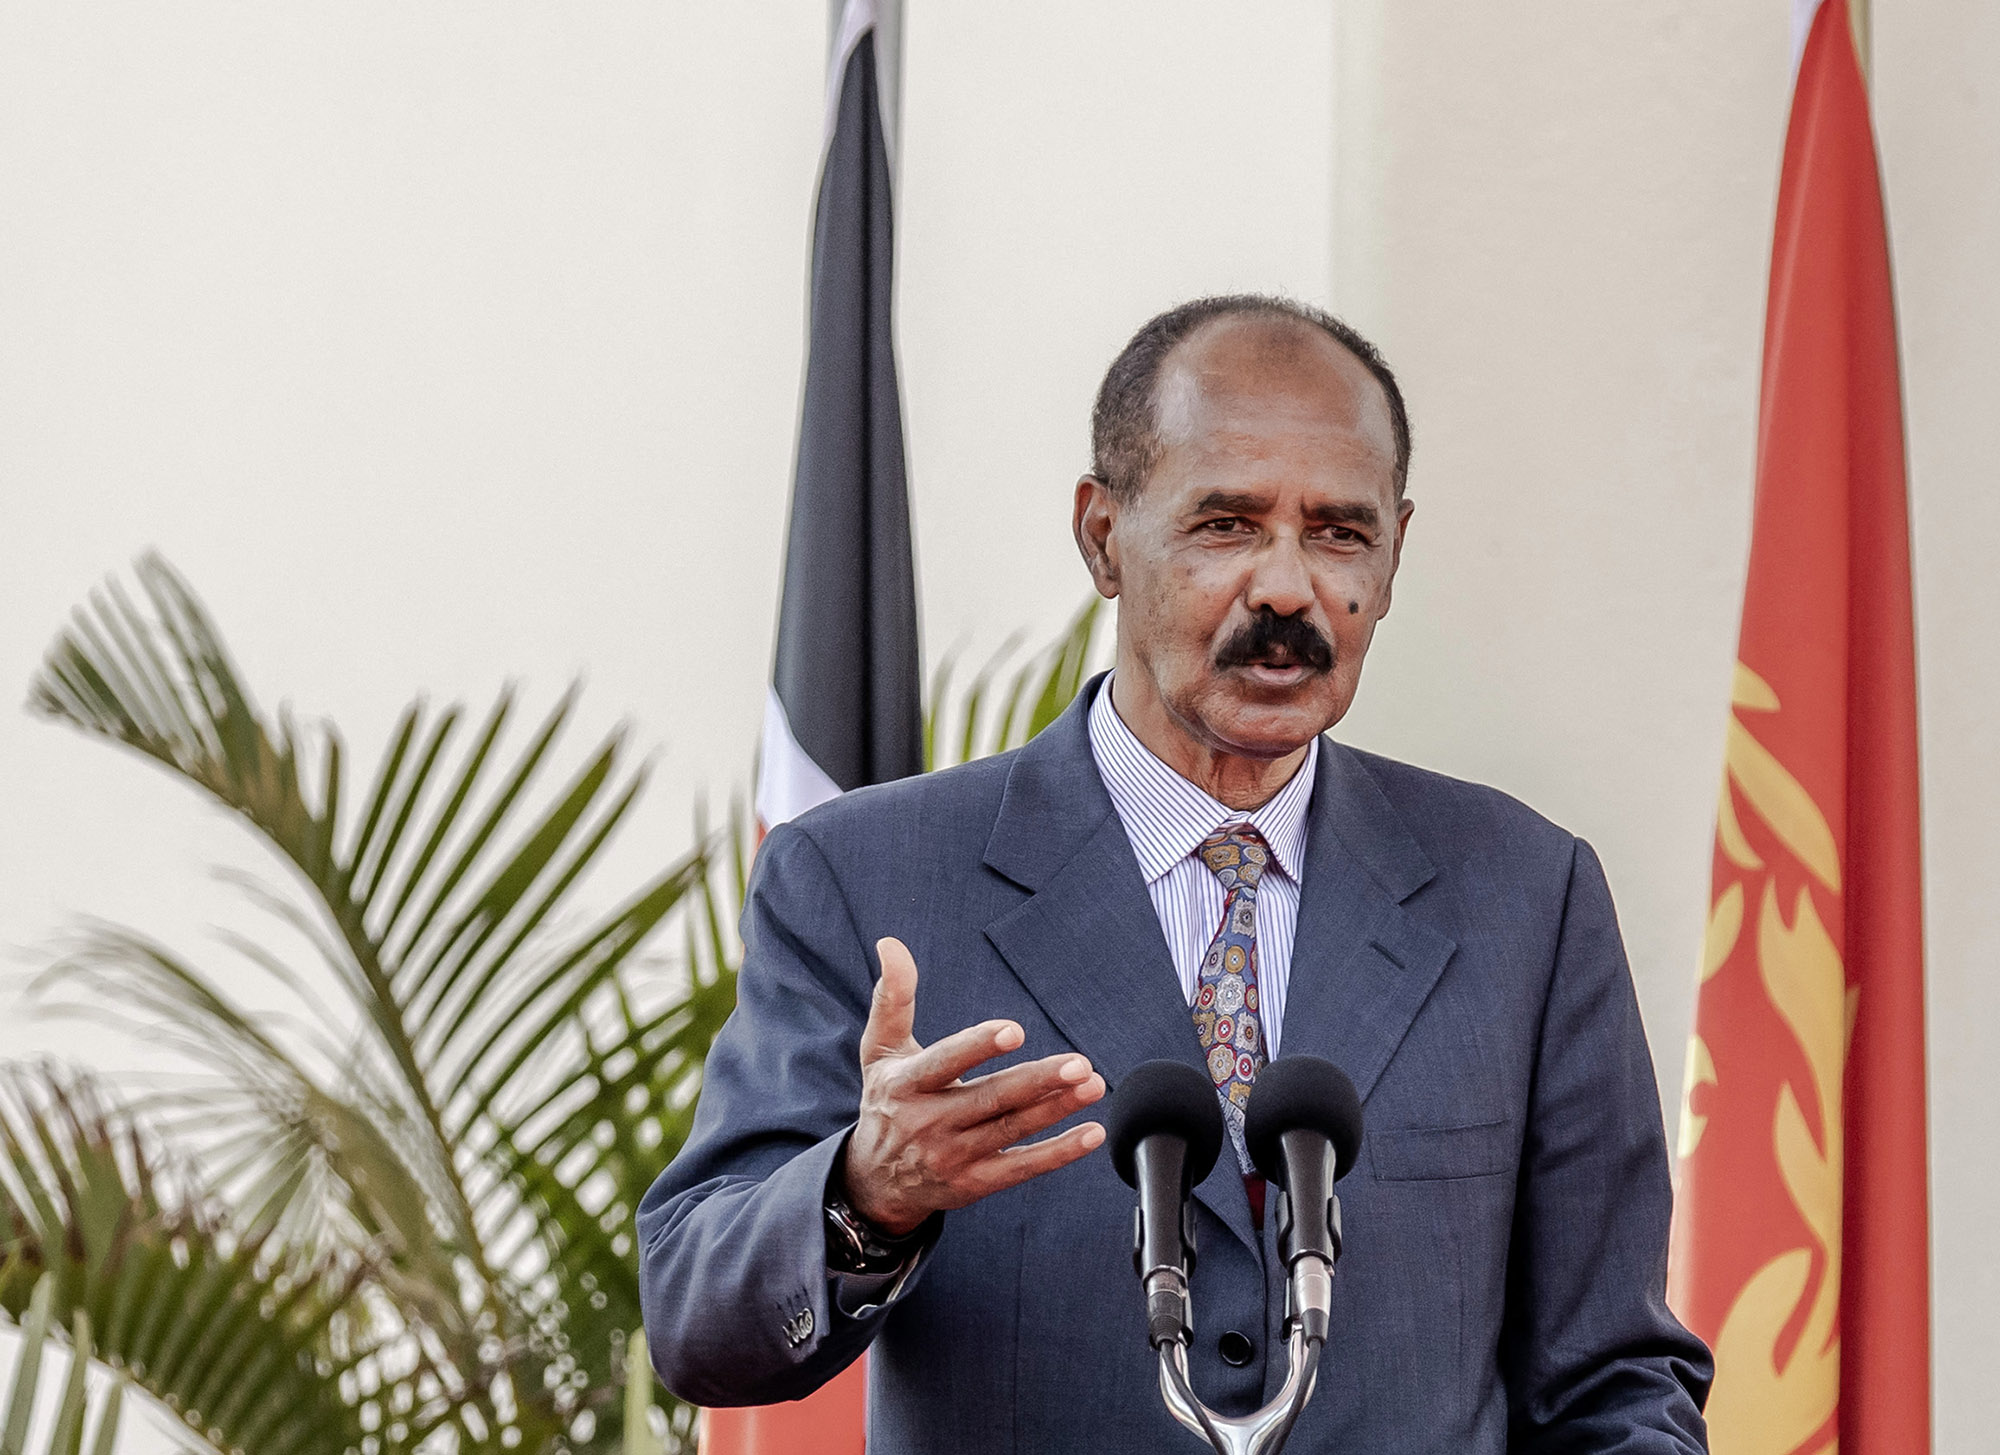 Eritrean Leader Isaias Afwerki Touts Peace, Regional Unity in Rare